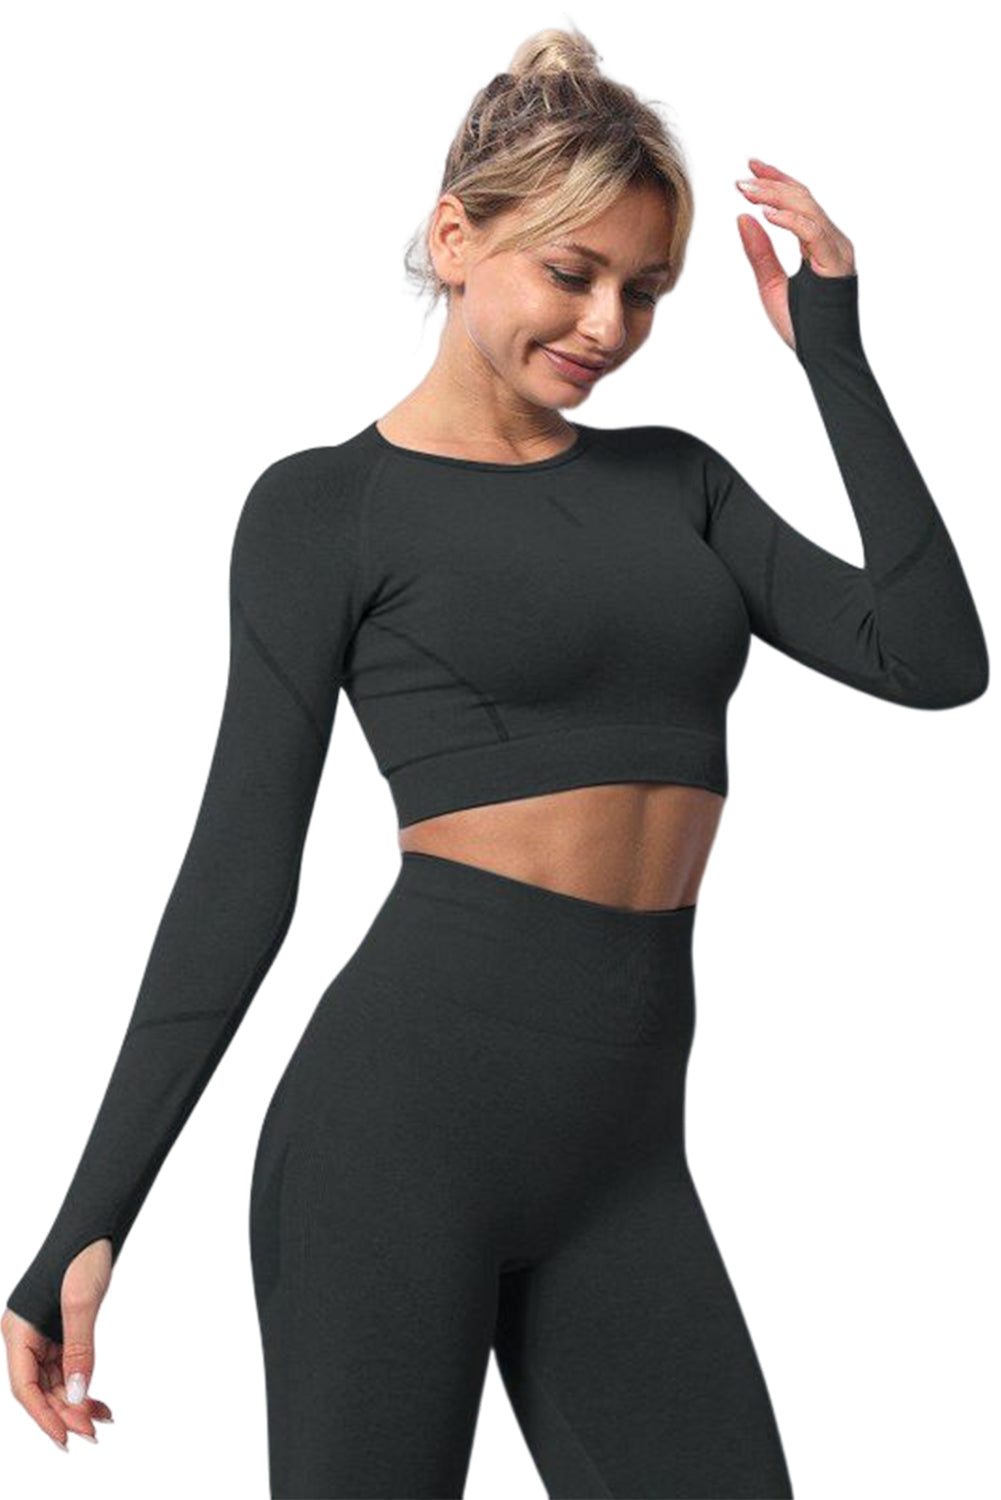 Gray Solid Color Long Sleeve Yoga Crop Top